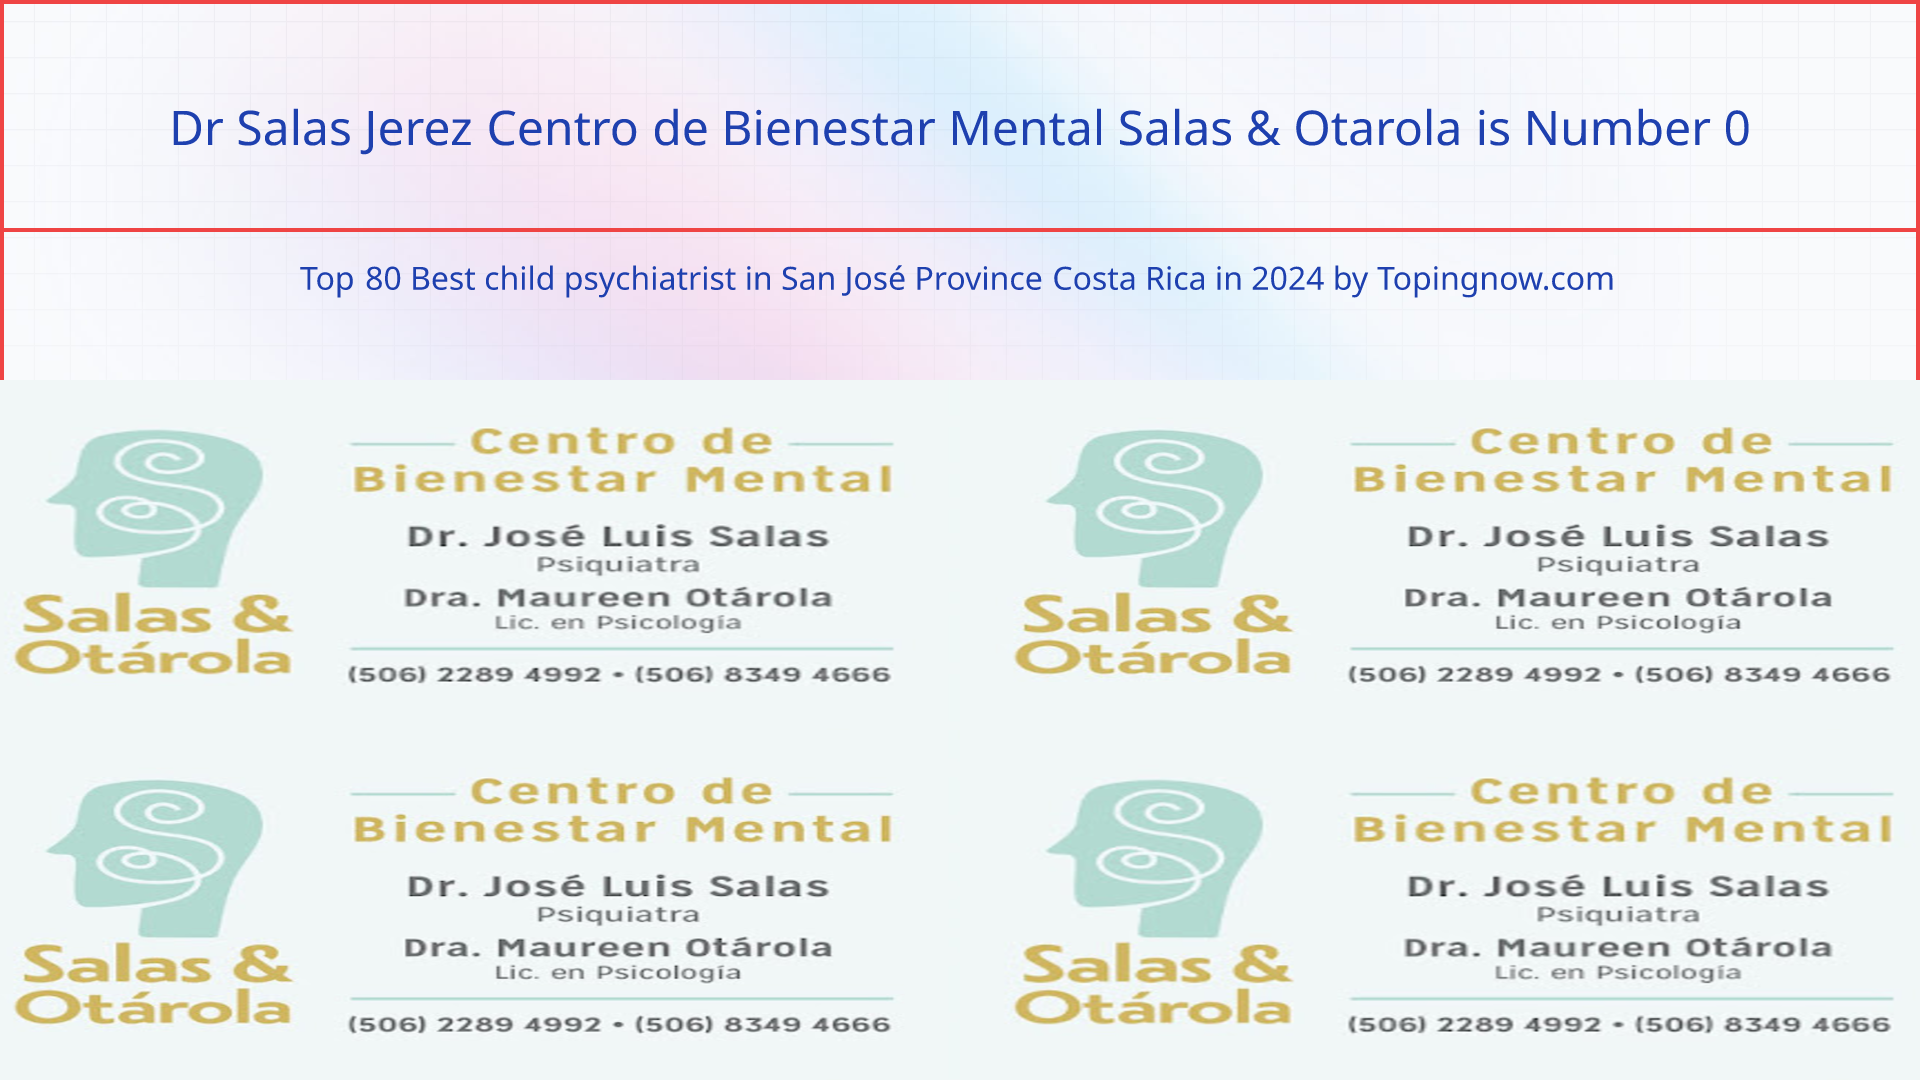 Dr Salas Jerez Centro de Bienestar Mental Salas & Otarola: Top 80 Best child psychiatrist in San José Province Costa Rica in 2024